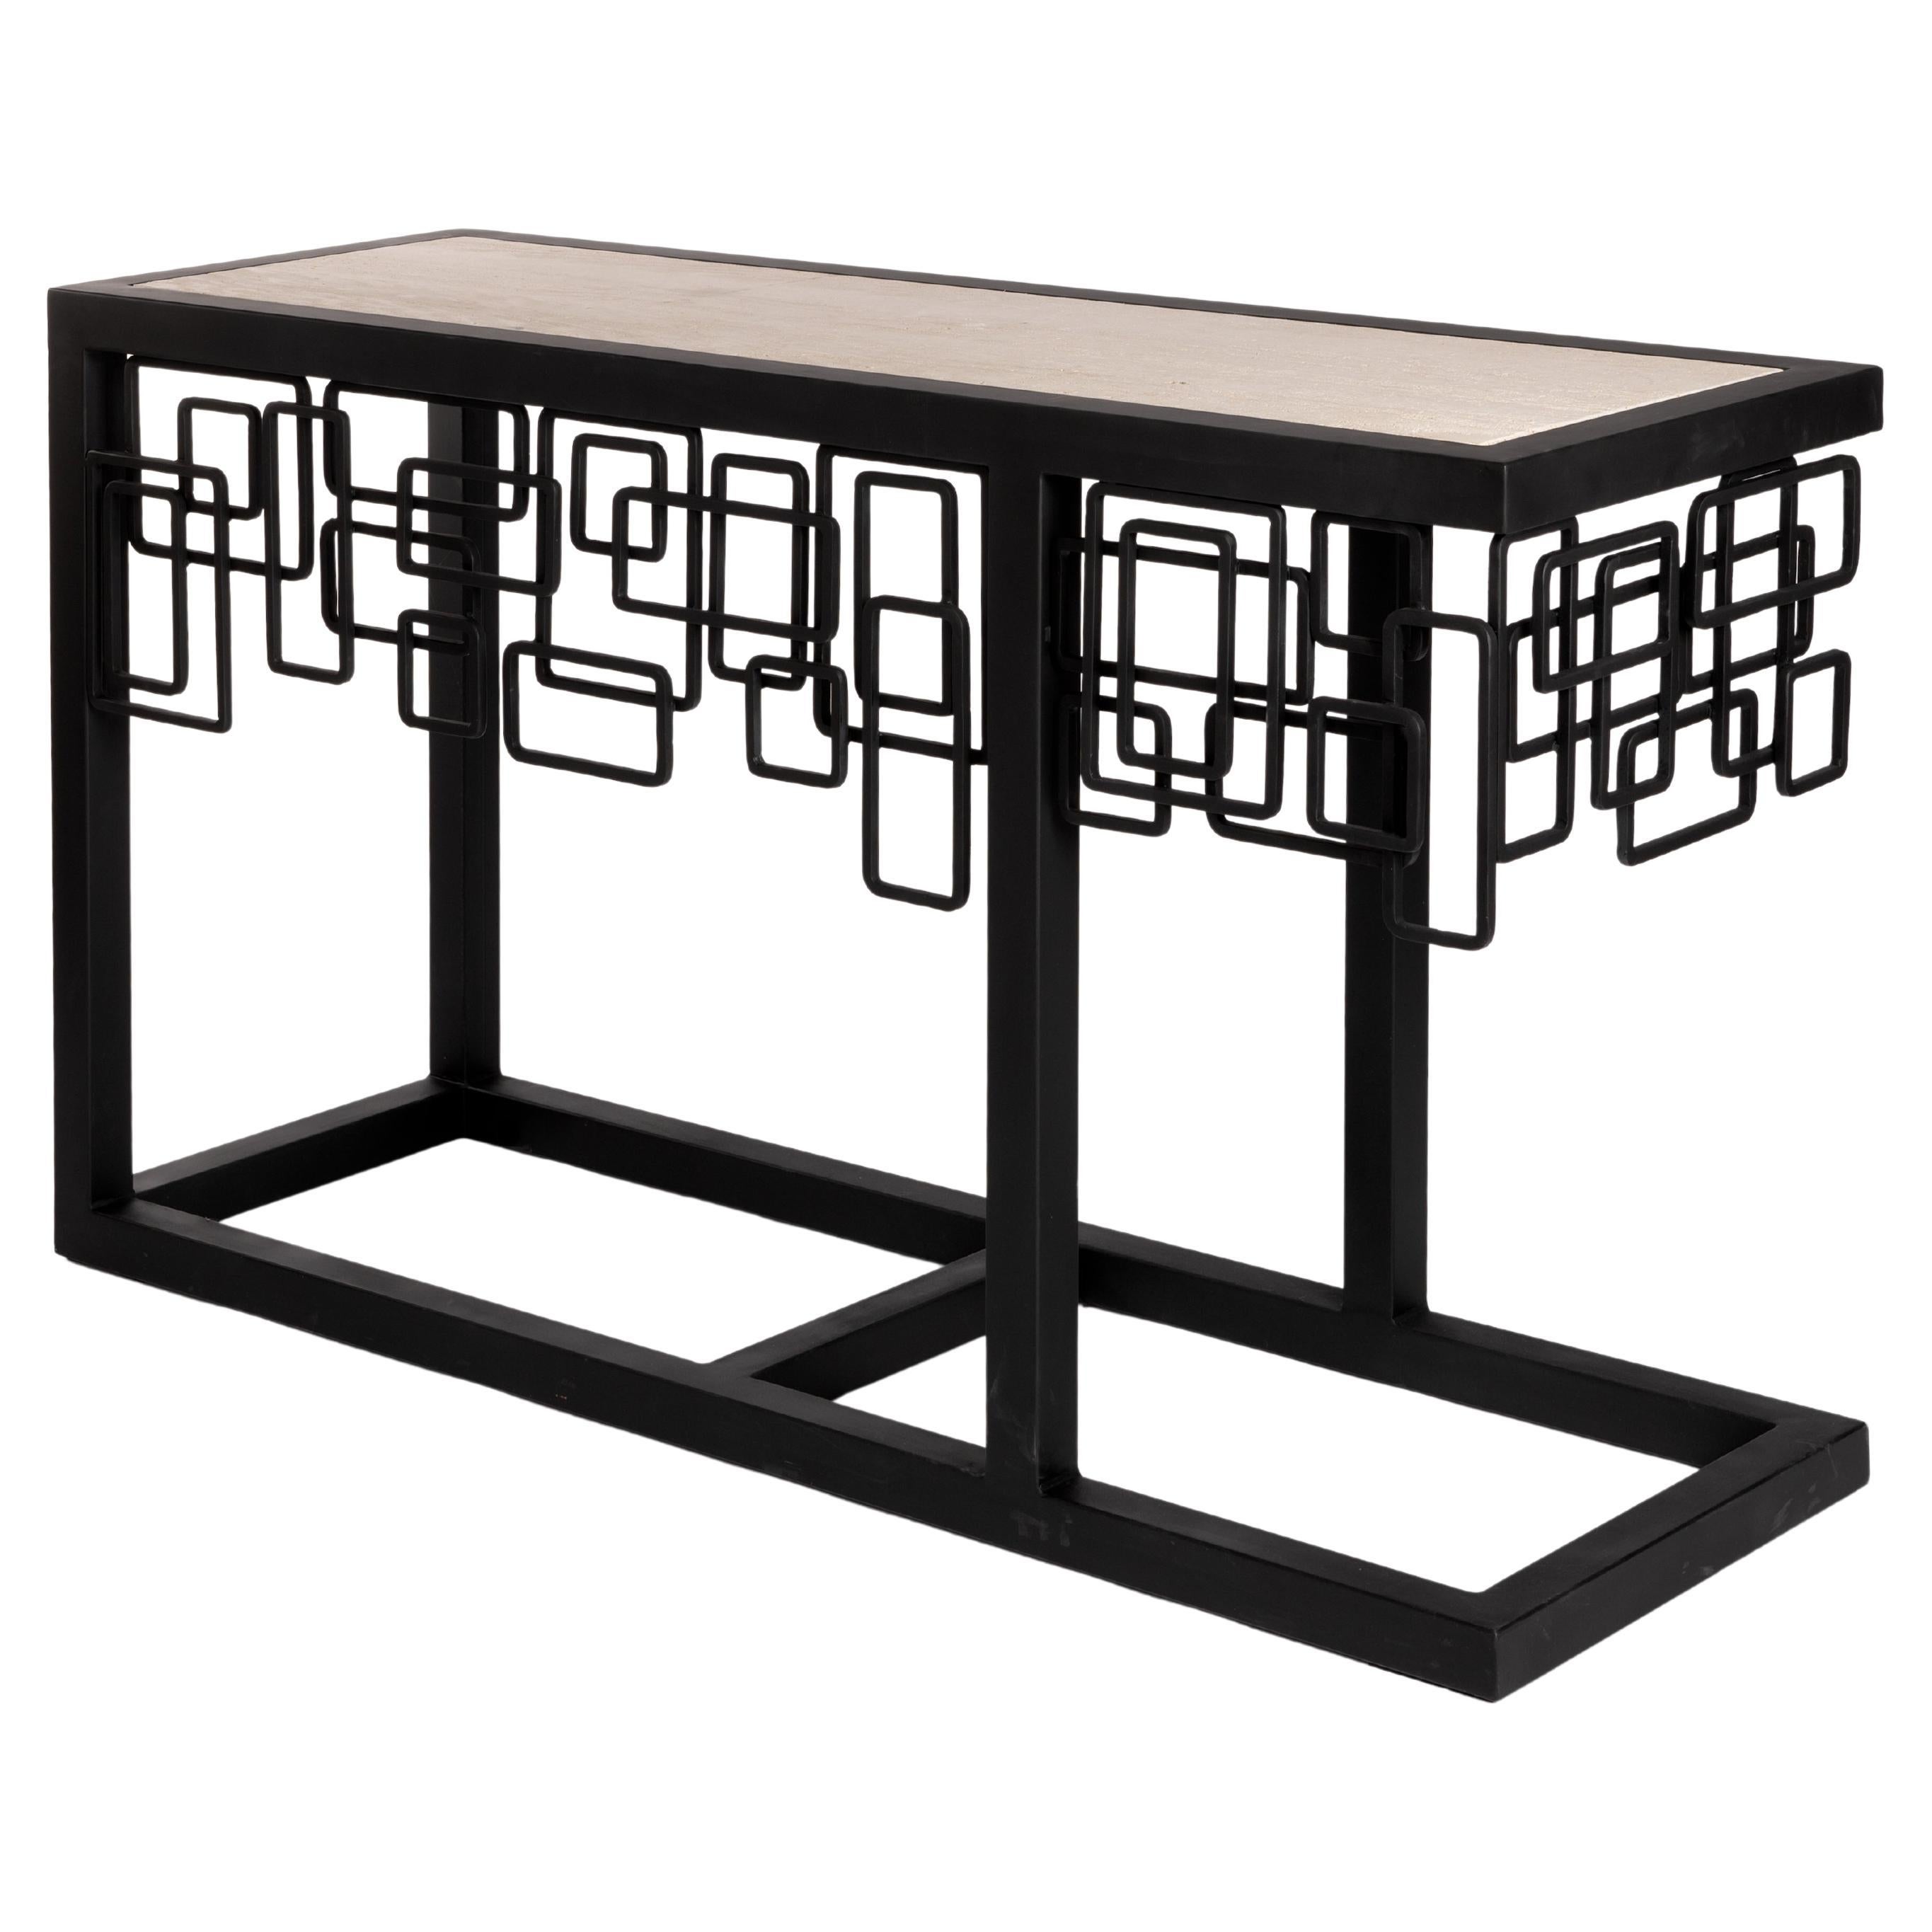 Italian Mid-Century Iron/Travertine Console Table Abstract-Geometric Design 70s For Sale